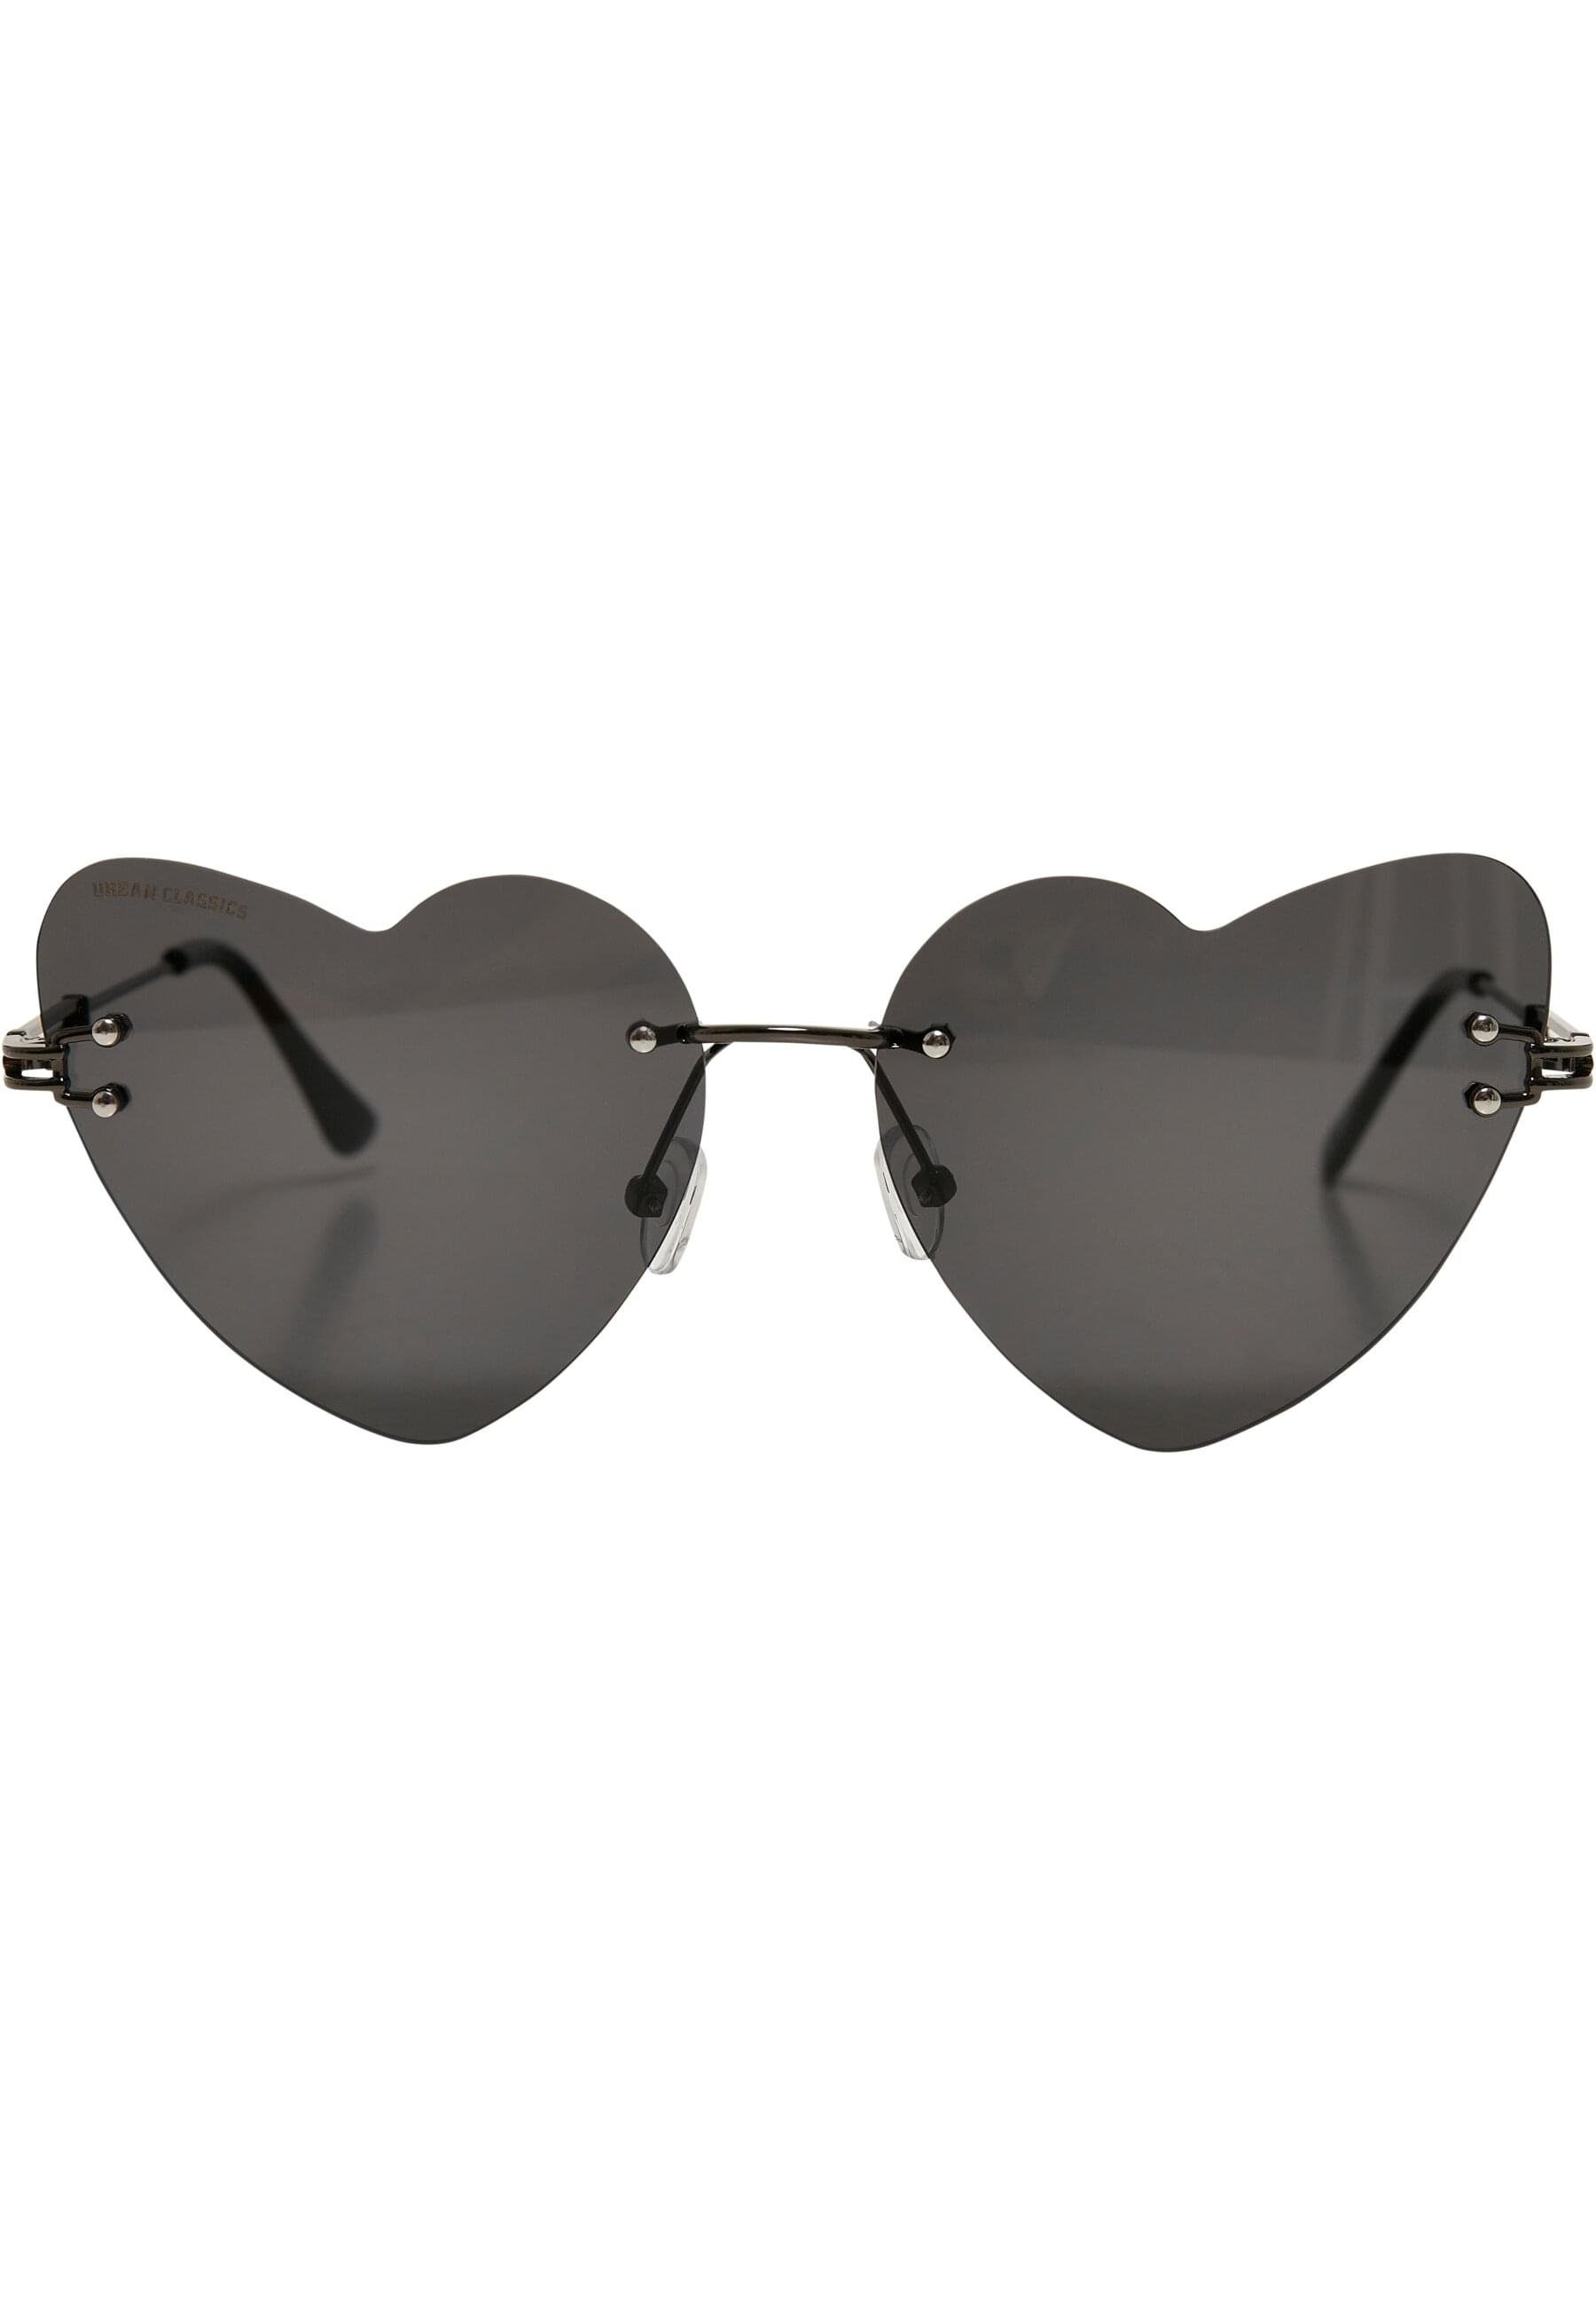 URBAN CLASSICS Sonnenbrille Unisex Sunglasses Heart Chain black/black With